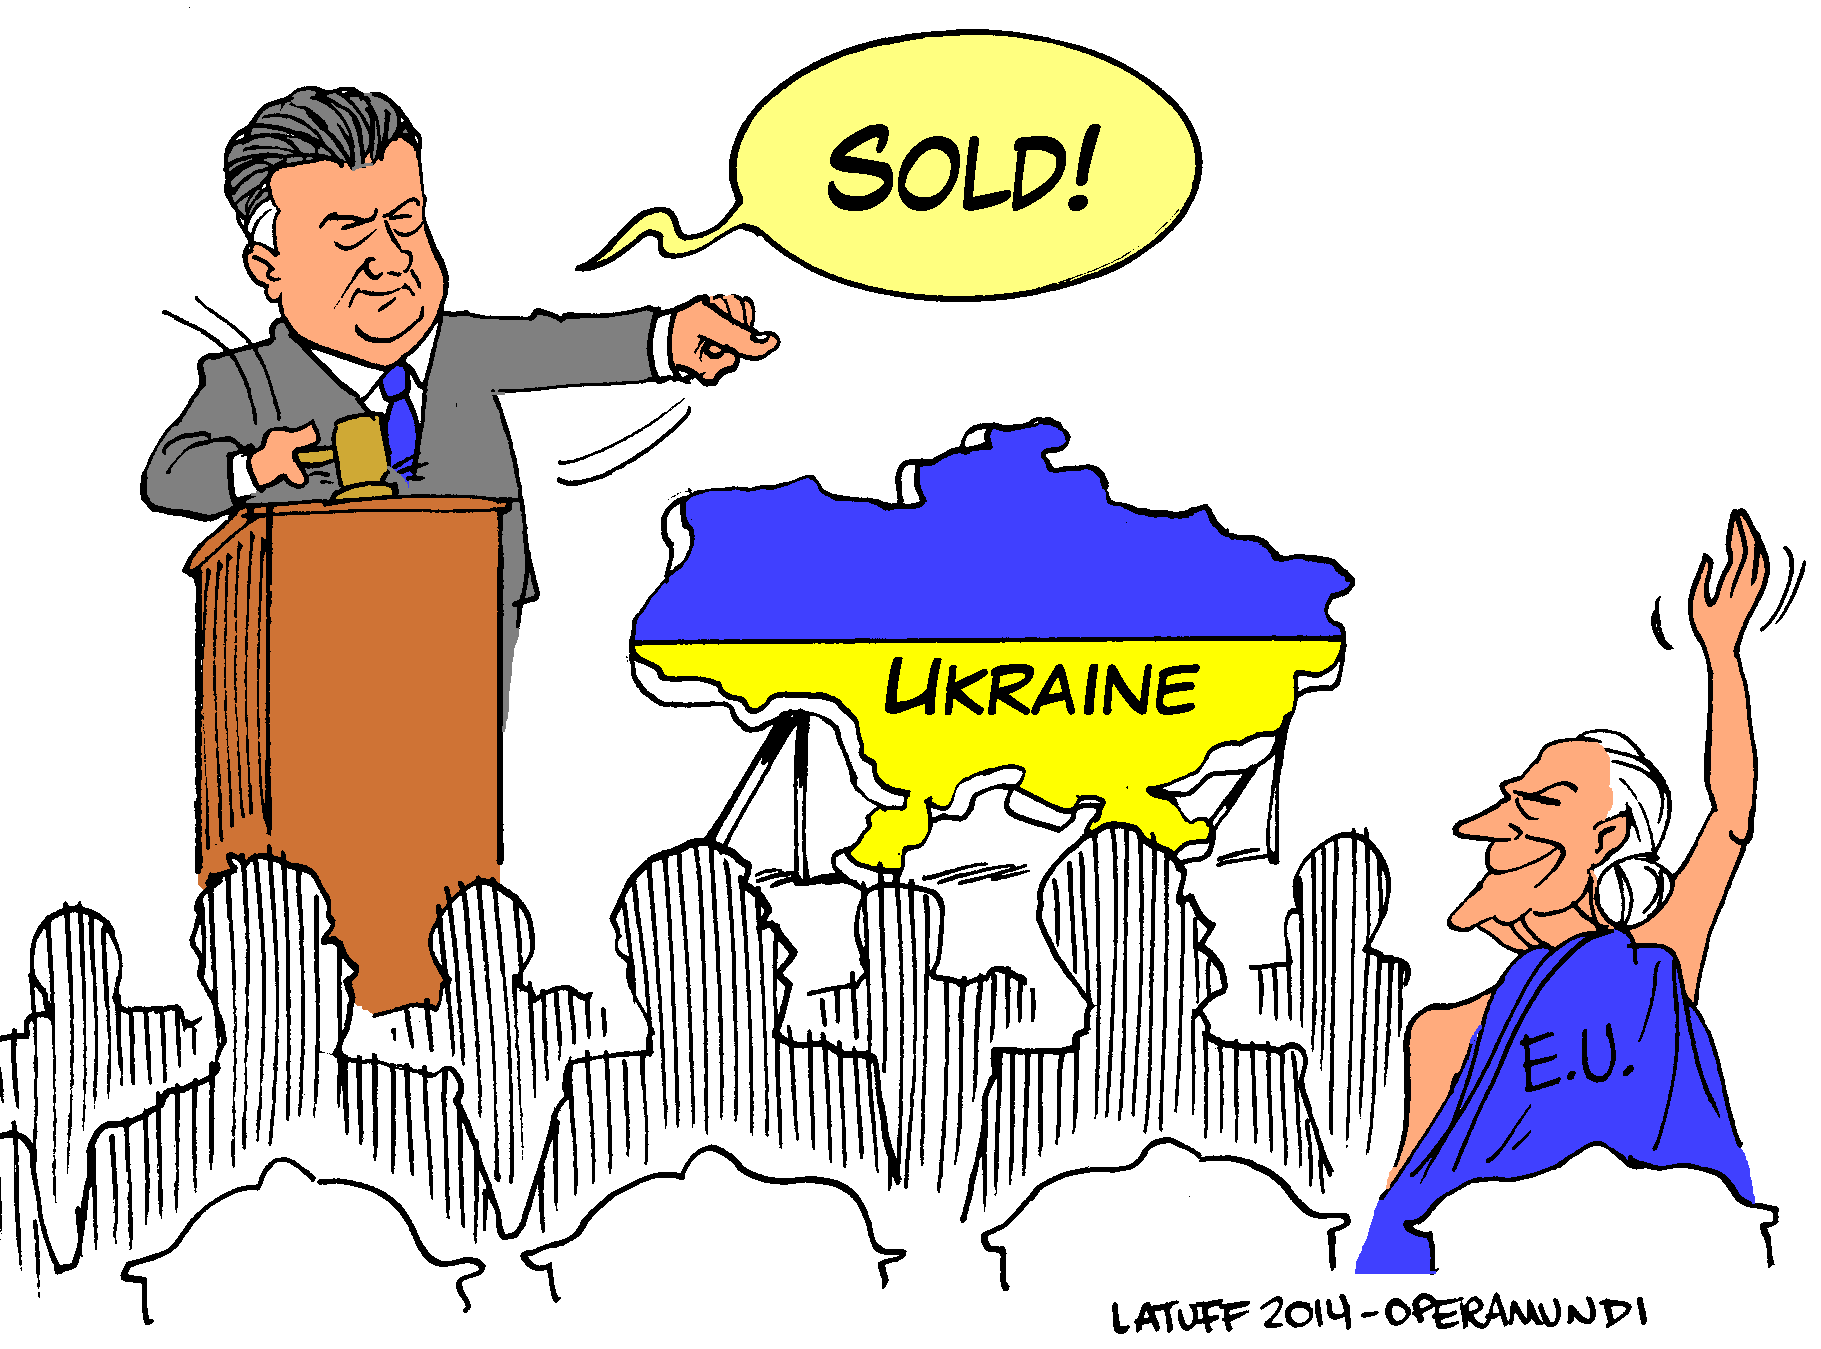 Ukraine sold